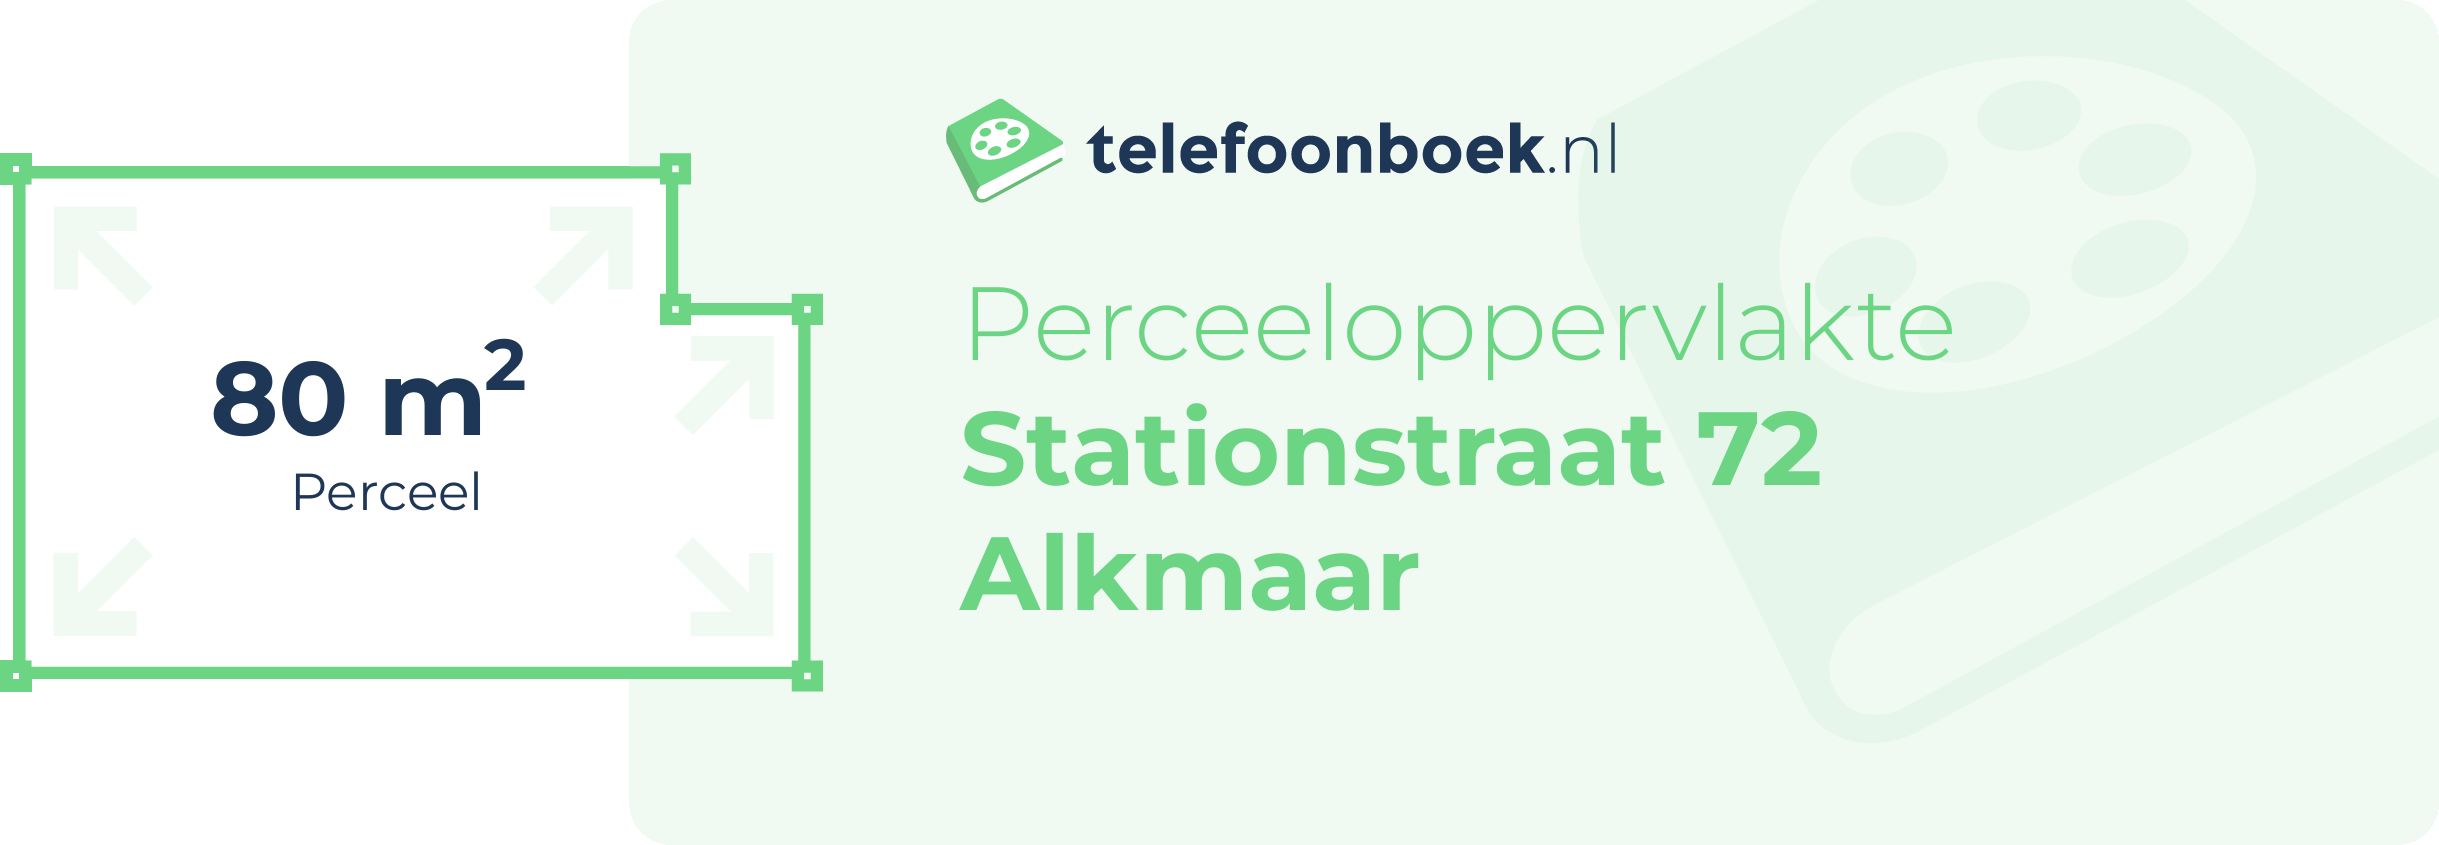 Perceeloppervlakte Stationstraat 72 Alkmaar